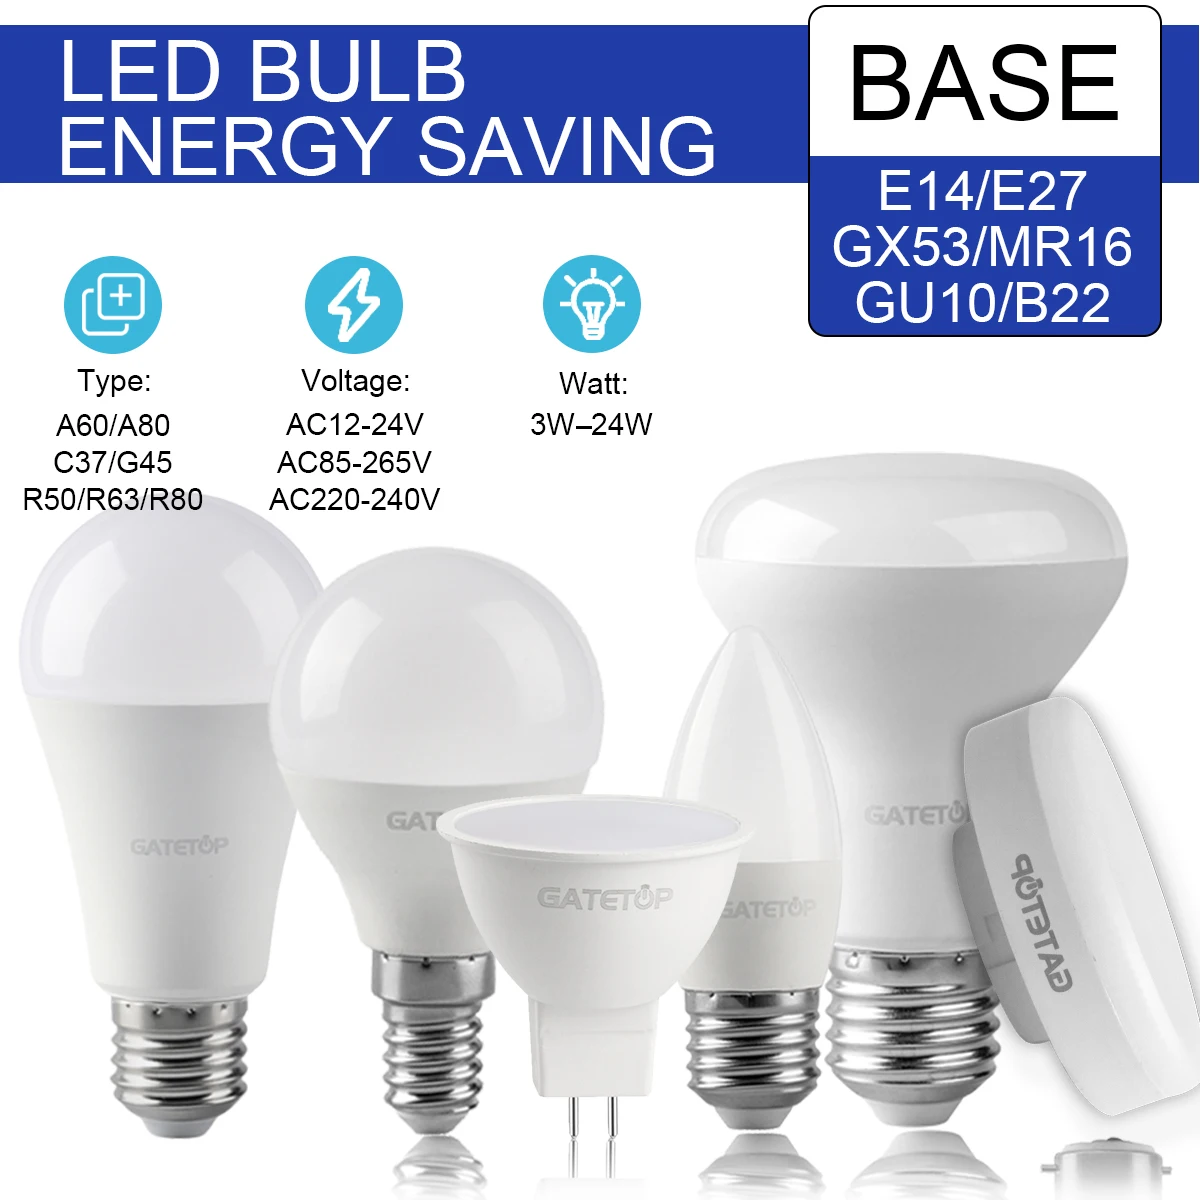 

Energy Saving LED Light Bulbs GU10 AC220-240V 24W 18W 15W 9W LED Bulb Bulbs E27 E14 GU10 Standard Base Lighting LED Bombilla